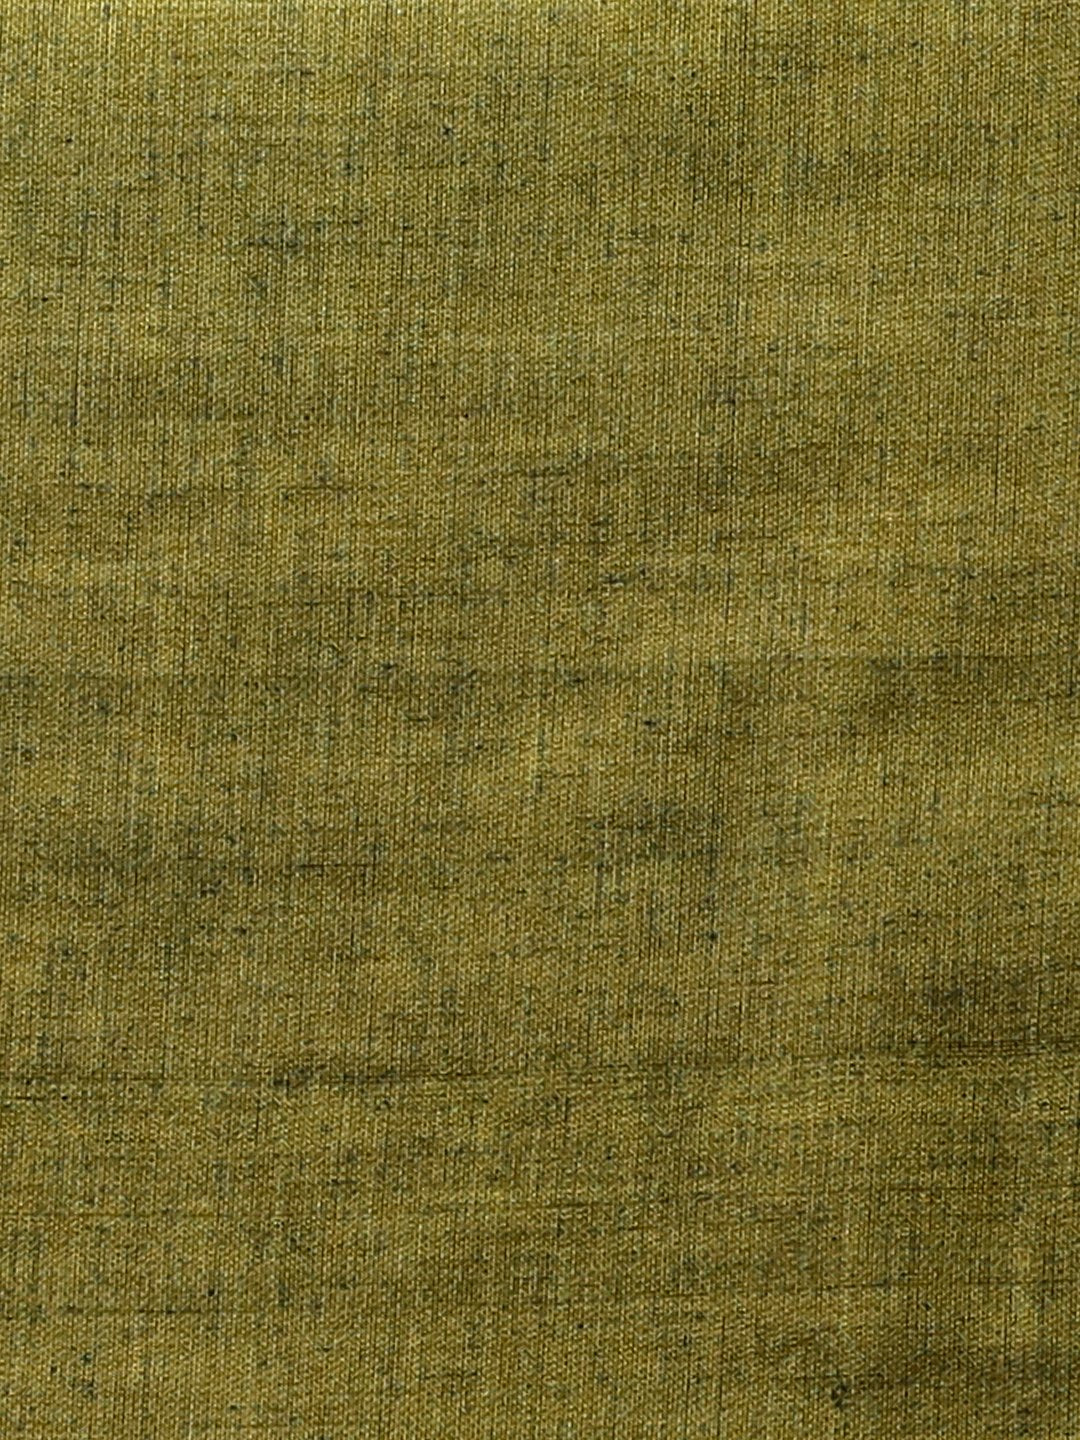 Ikat blue grey handloom cotton saree